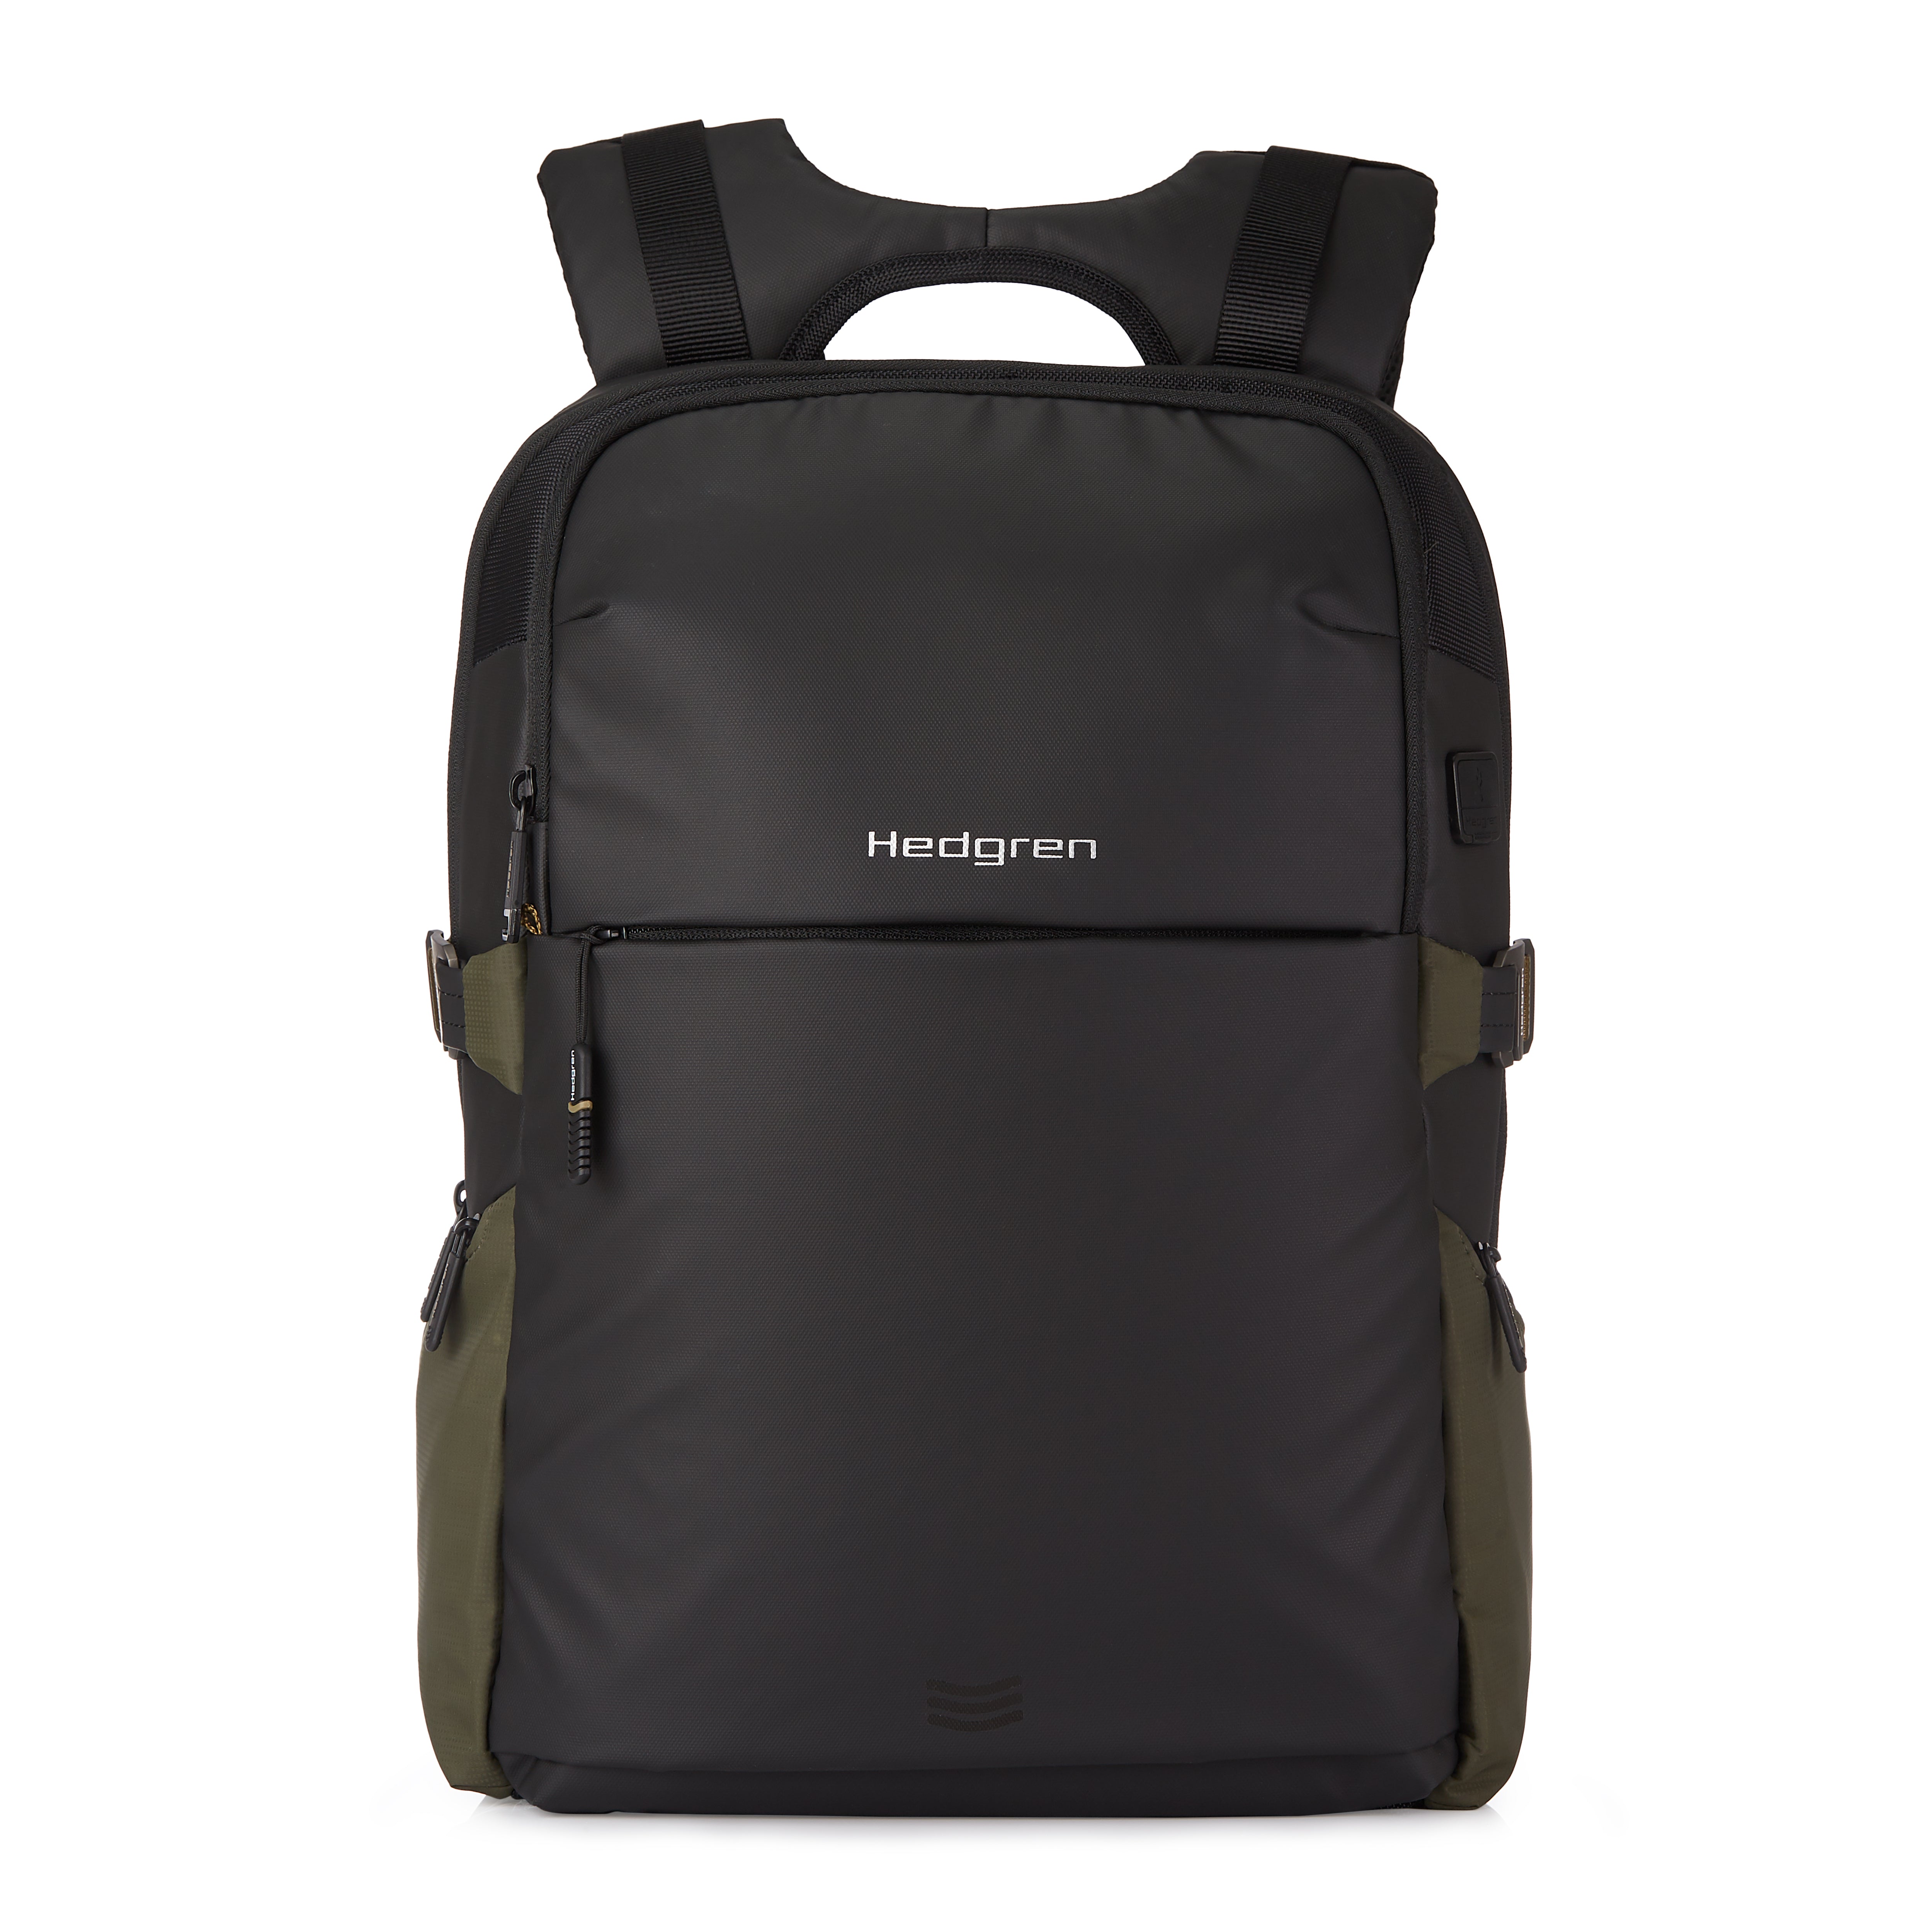 Hedgren - HCOM05.163 Rail Rfid Raincover backpack SP - Urban Jungle-4